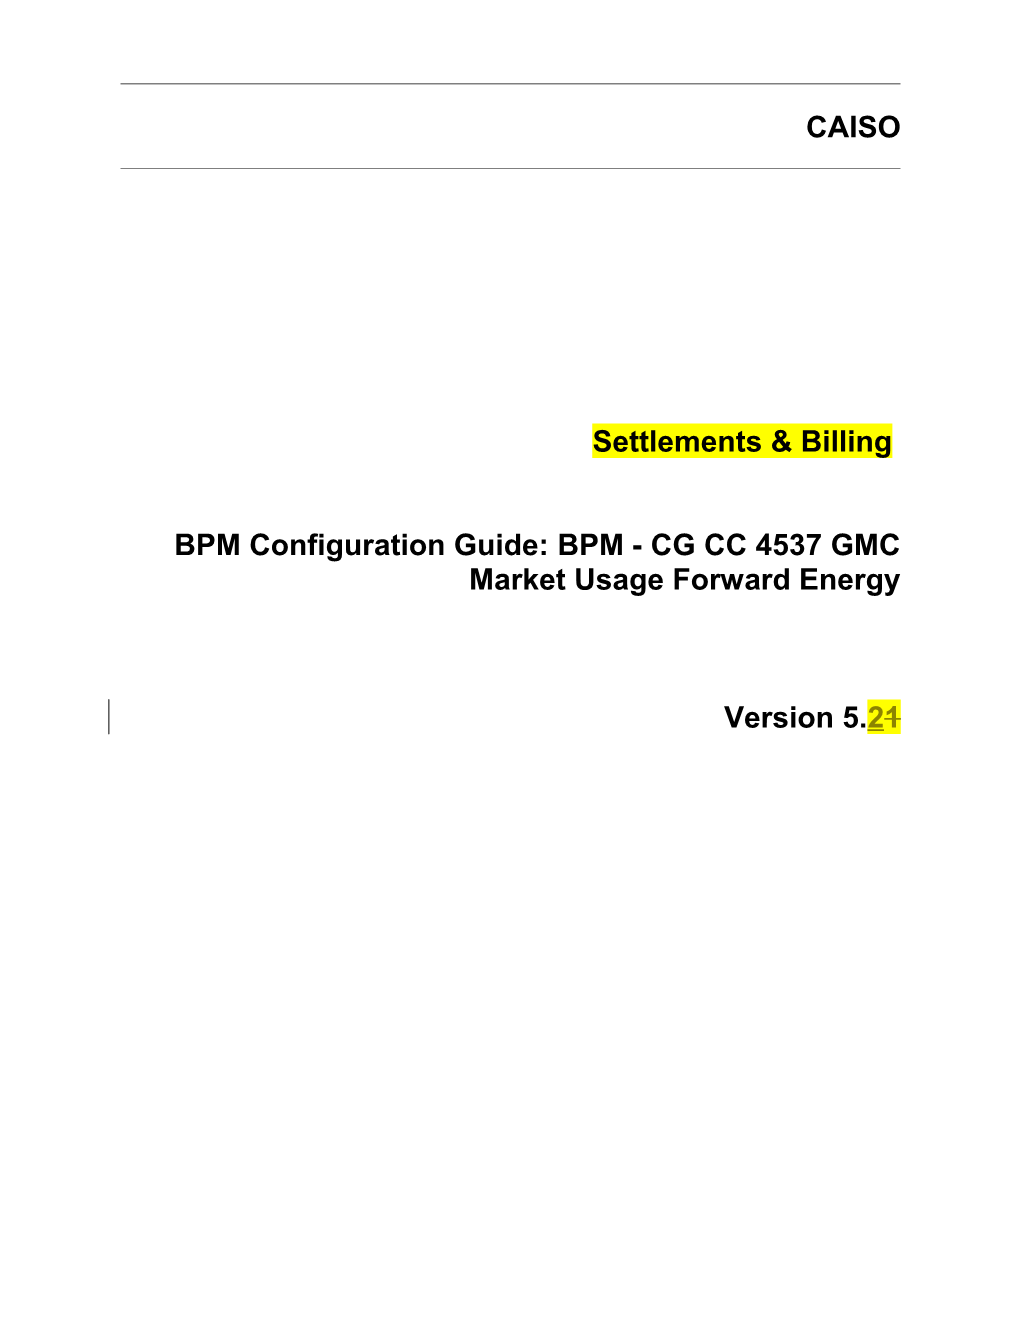 BPM - CG CC 4537 GMC Market Usage Forward Energy